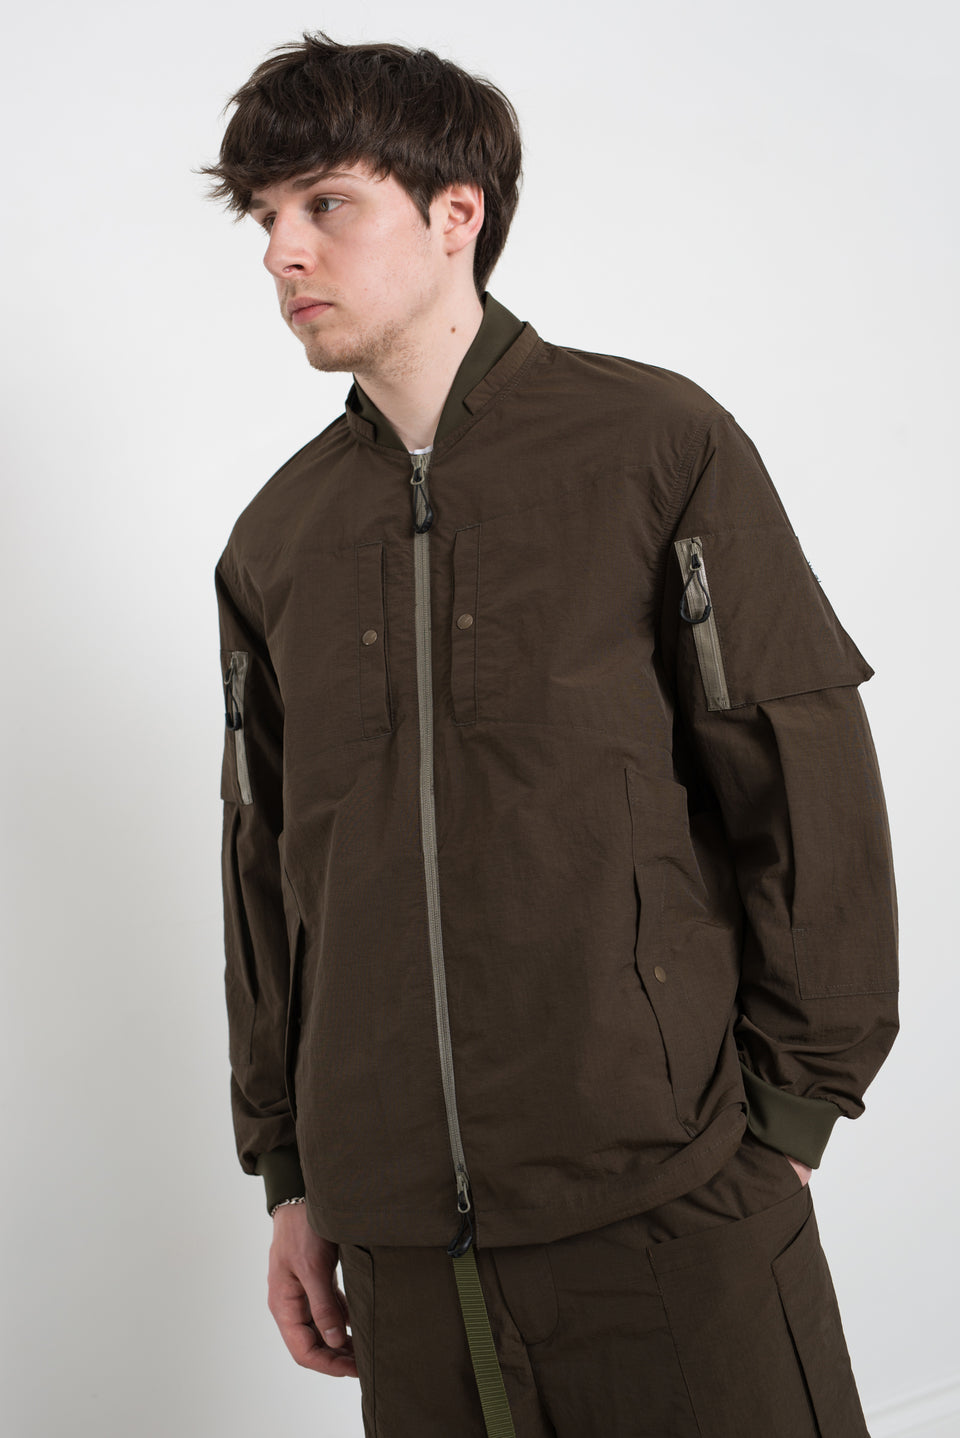 CMF Outdoor Garment 23SS SS23 Comfy Outdoor Garment CAF Jacket Khaki Calculus Victoria BC Canada